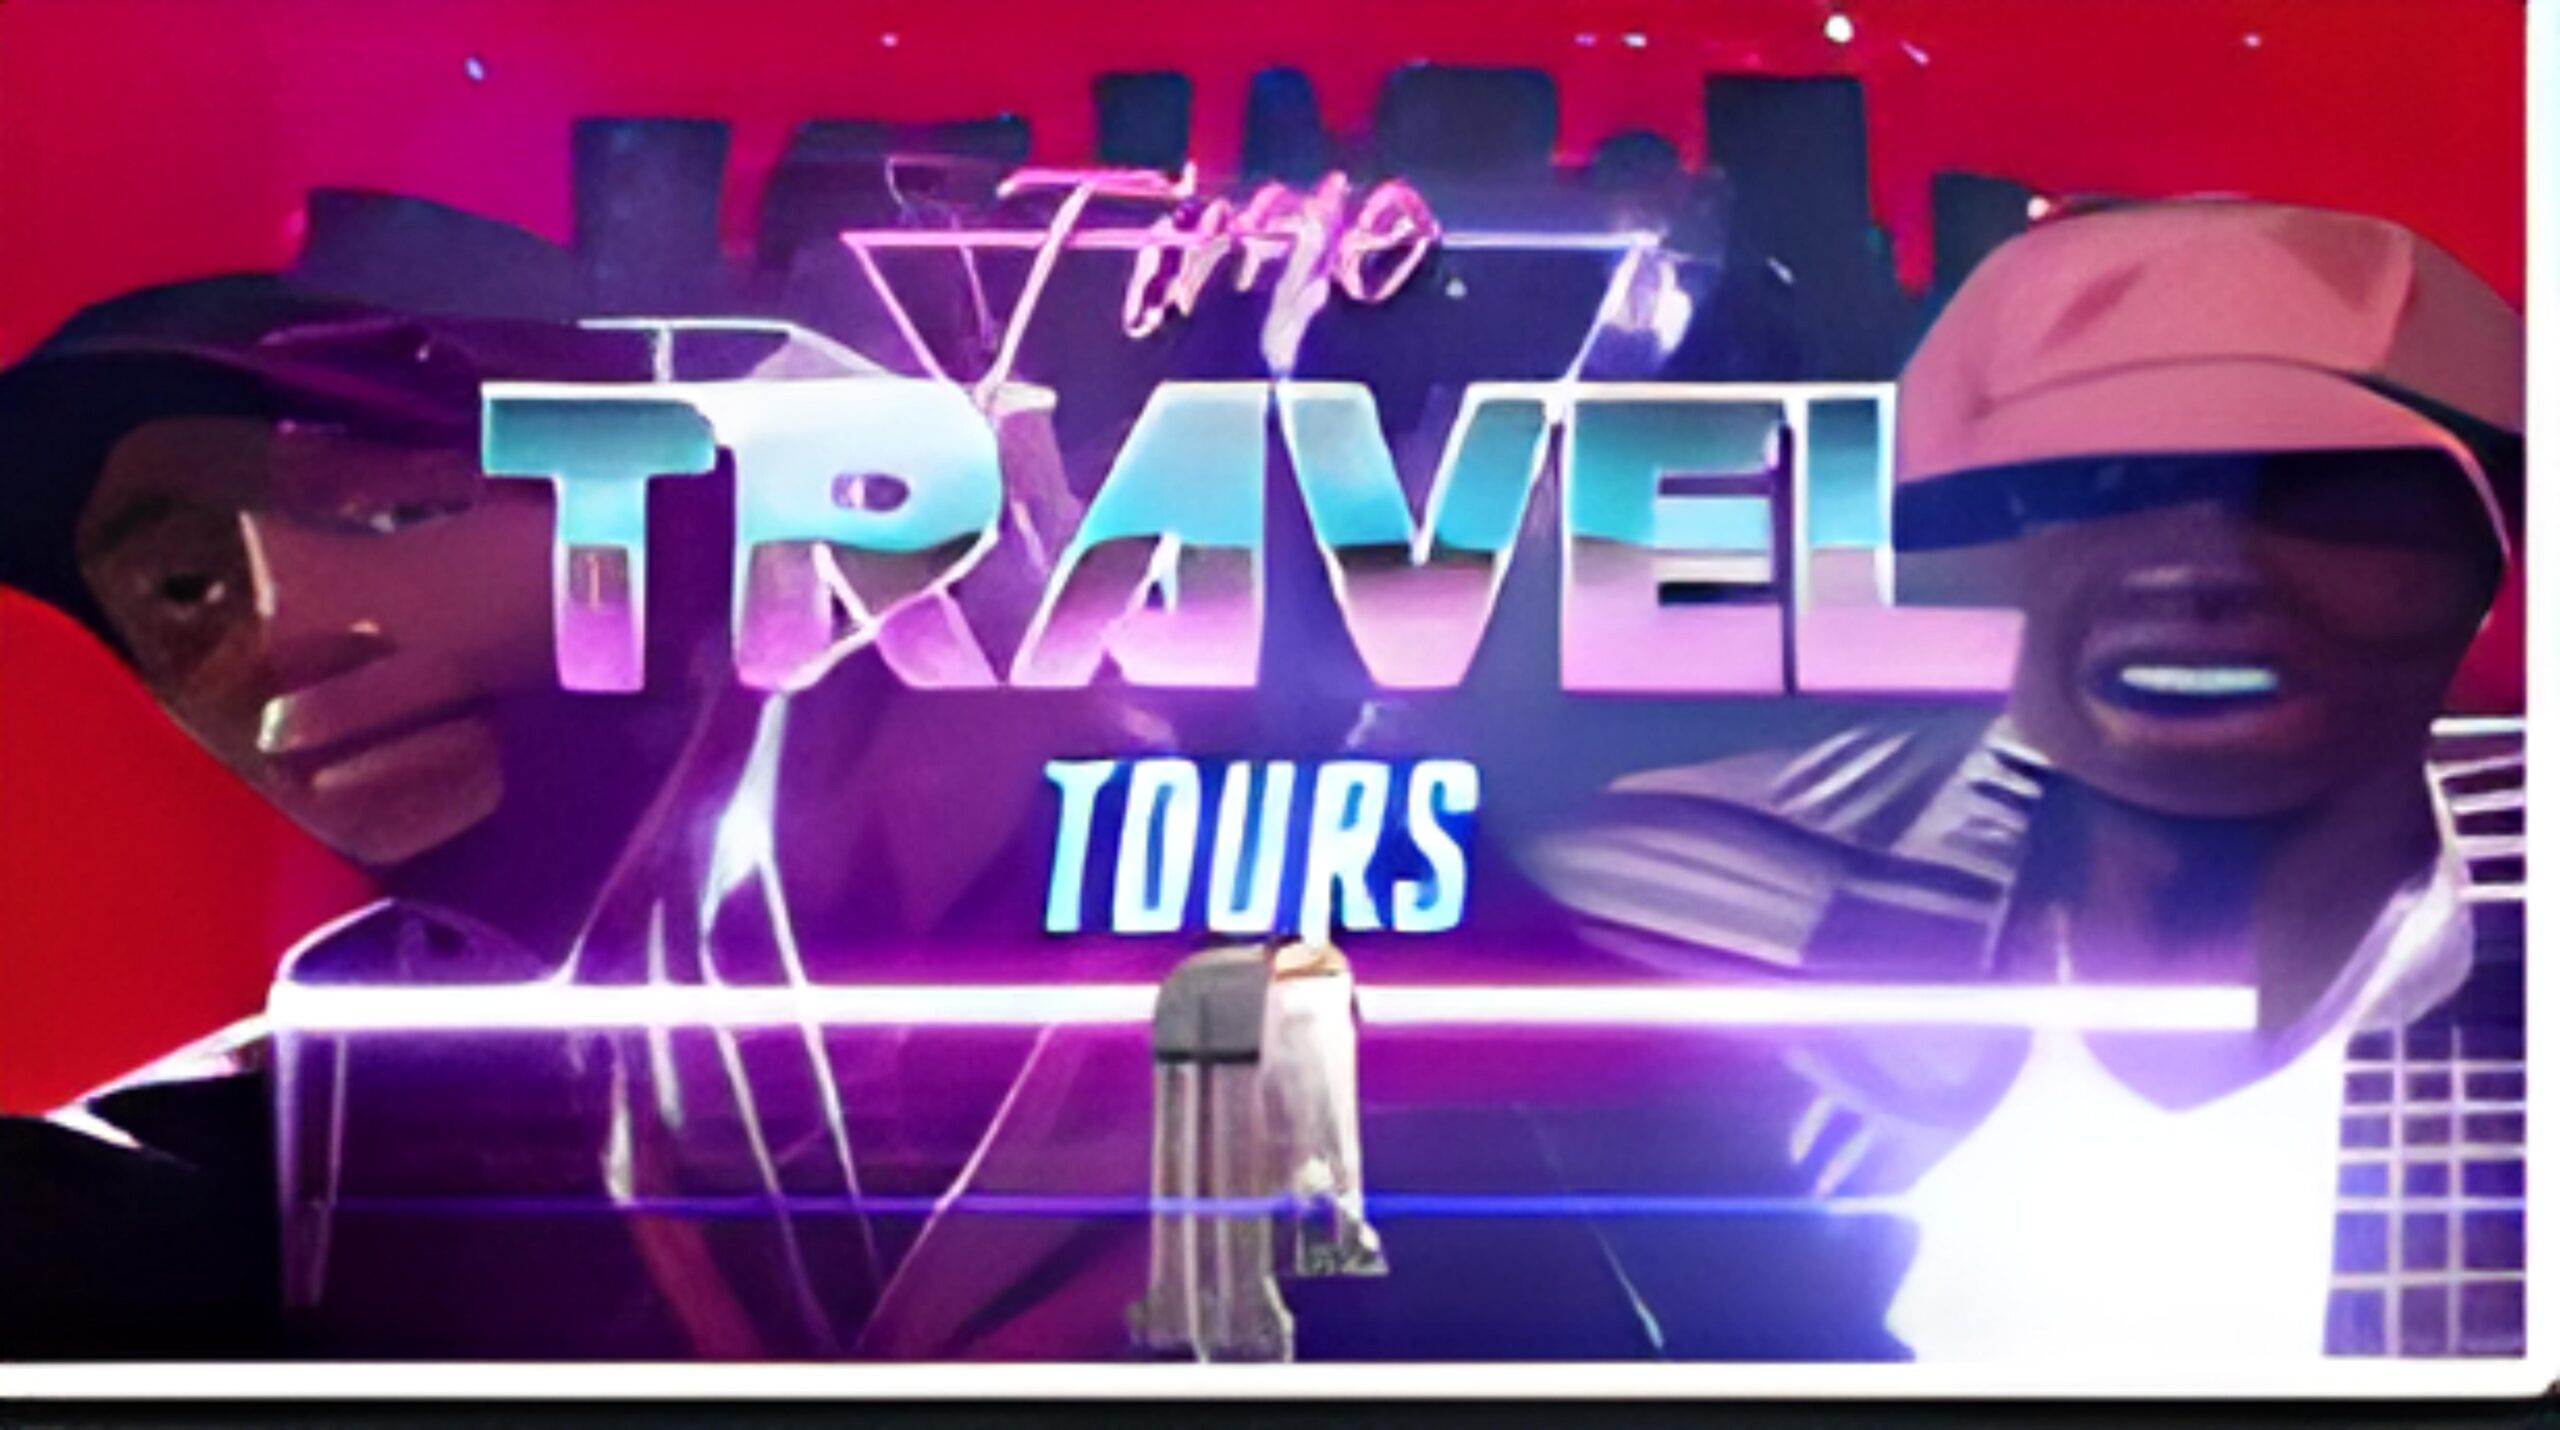 Camp Lo "Sparkle" Time Travel Tours AI powered Remix